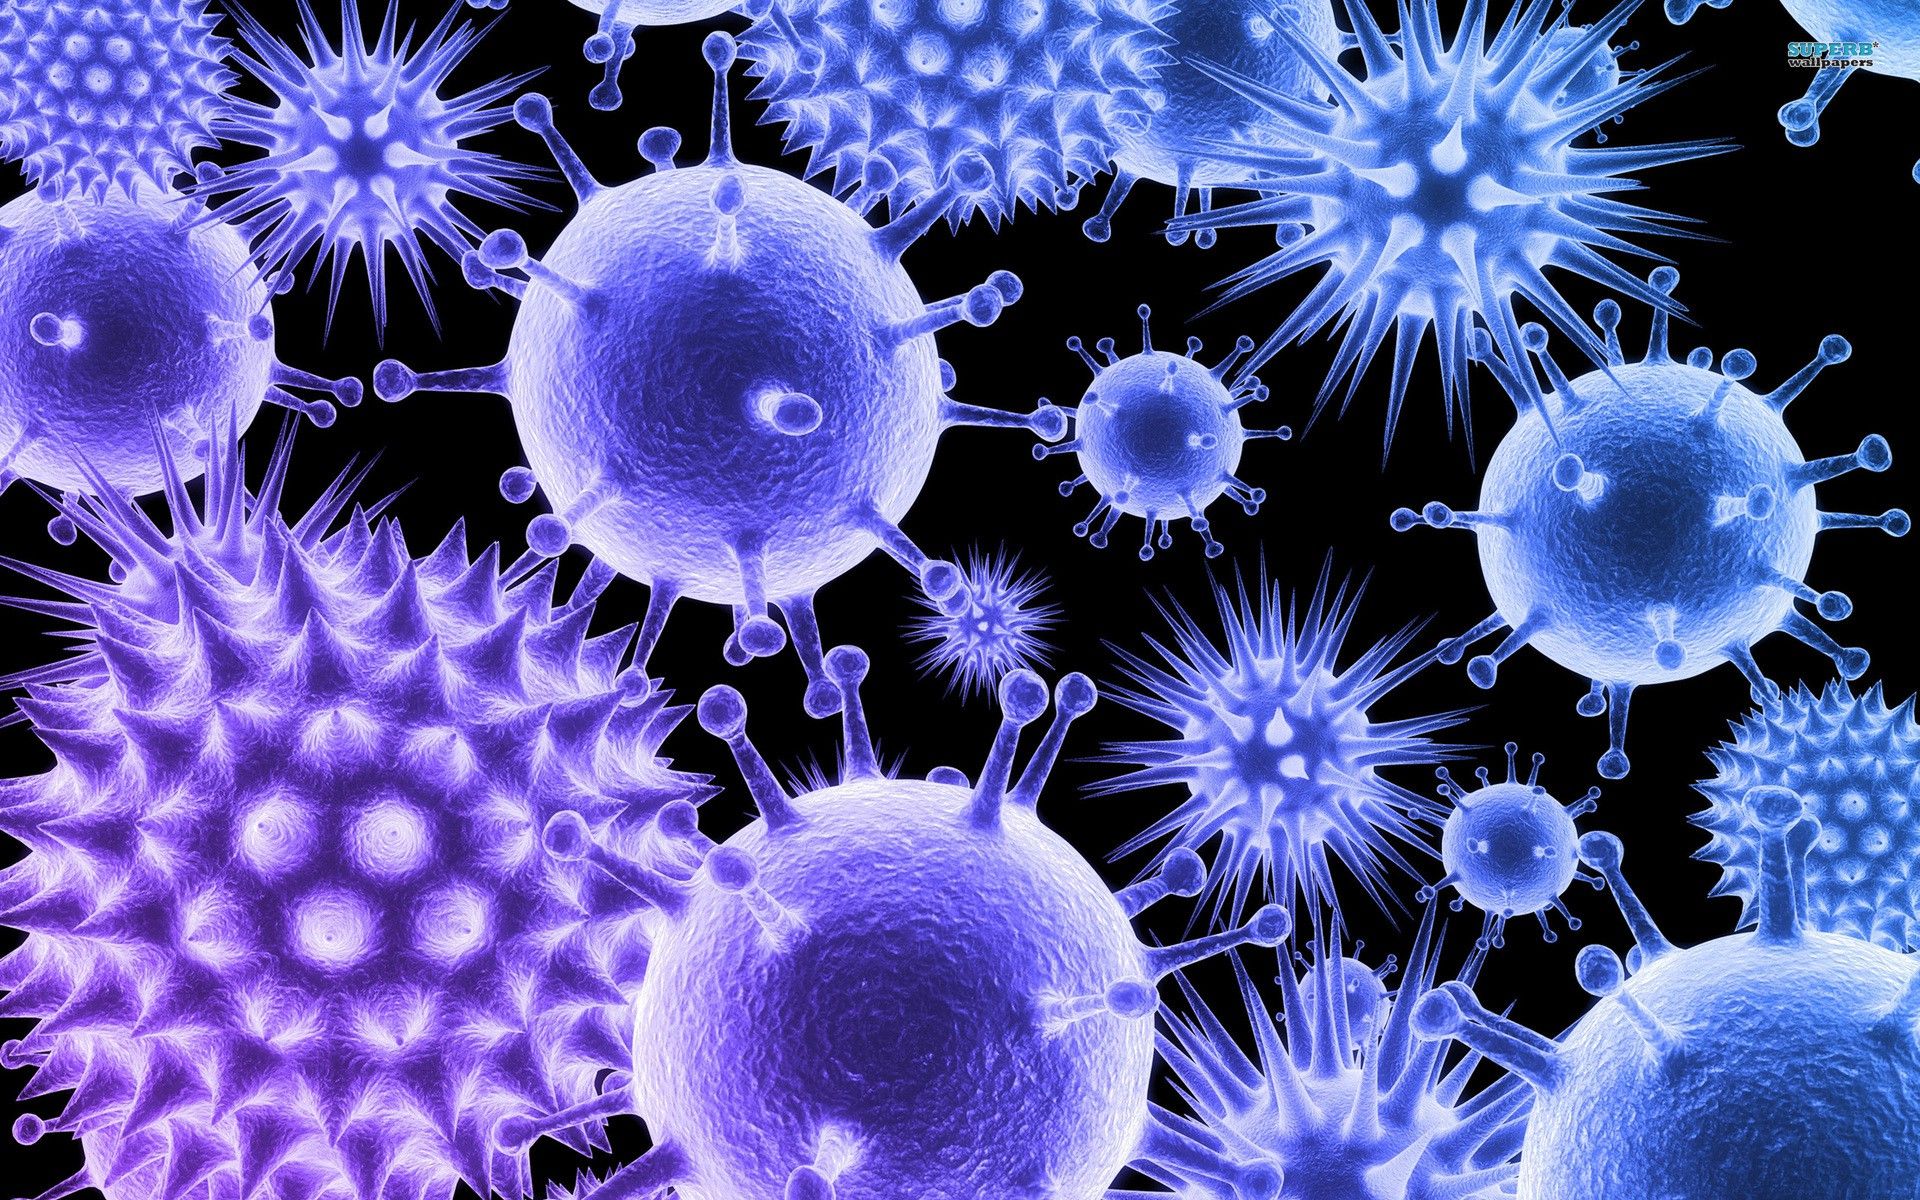 "ALIEN" INSIDE US: Why does nature need virus epidemics?